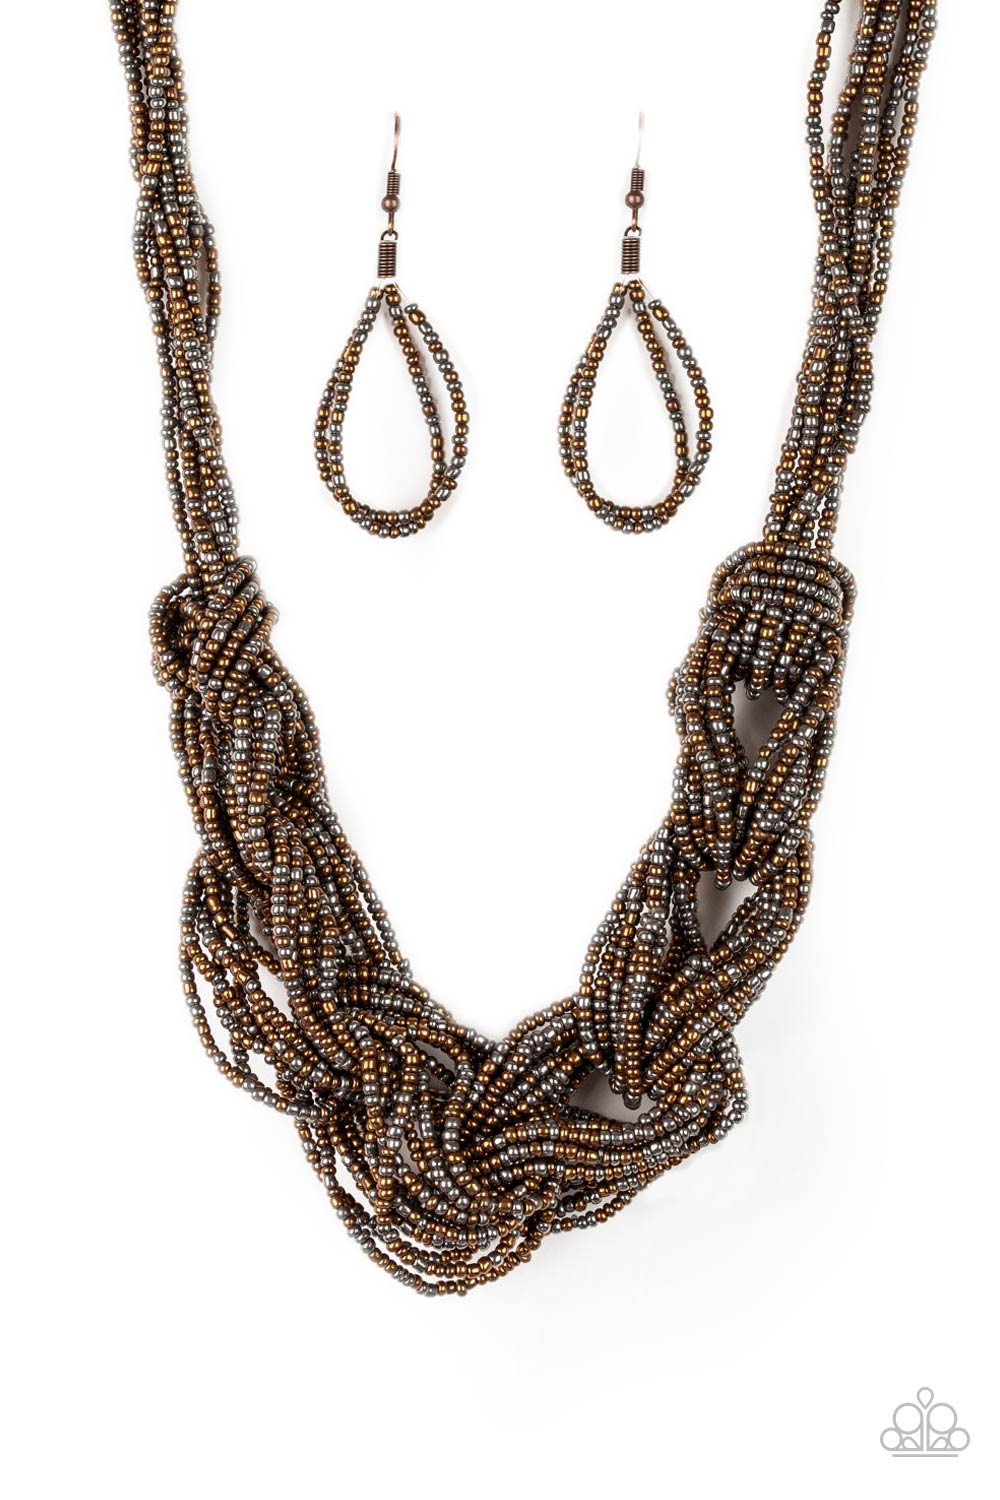 City Catwalk - Copper/Gunmetal (Seed Bead) Necklace freeshipping - JewLz4u Gemstone Gallery